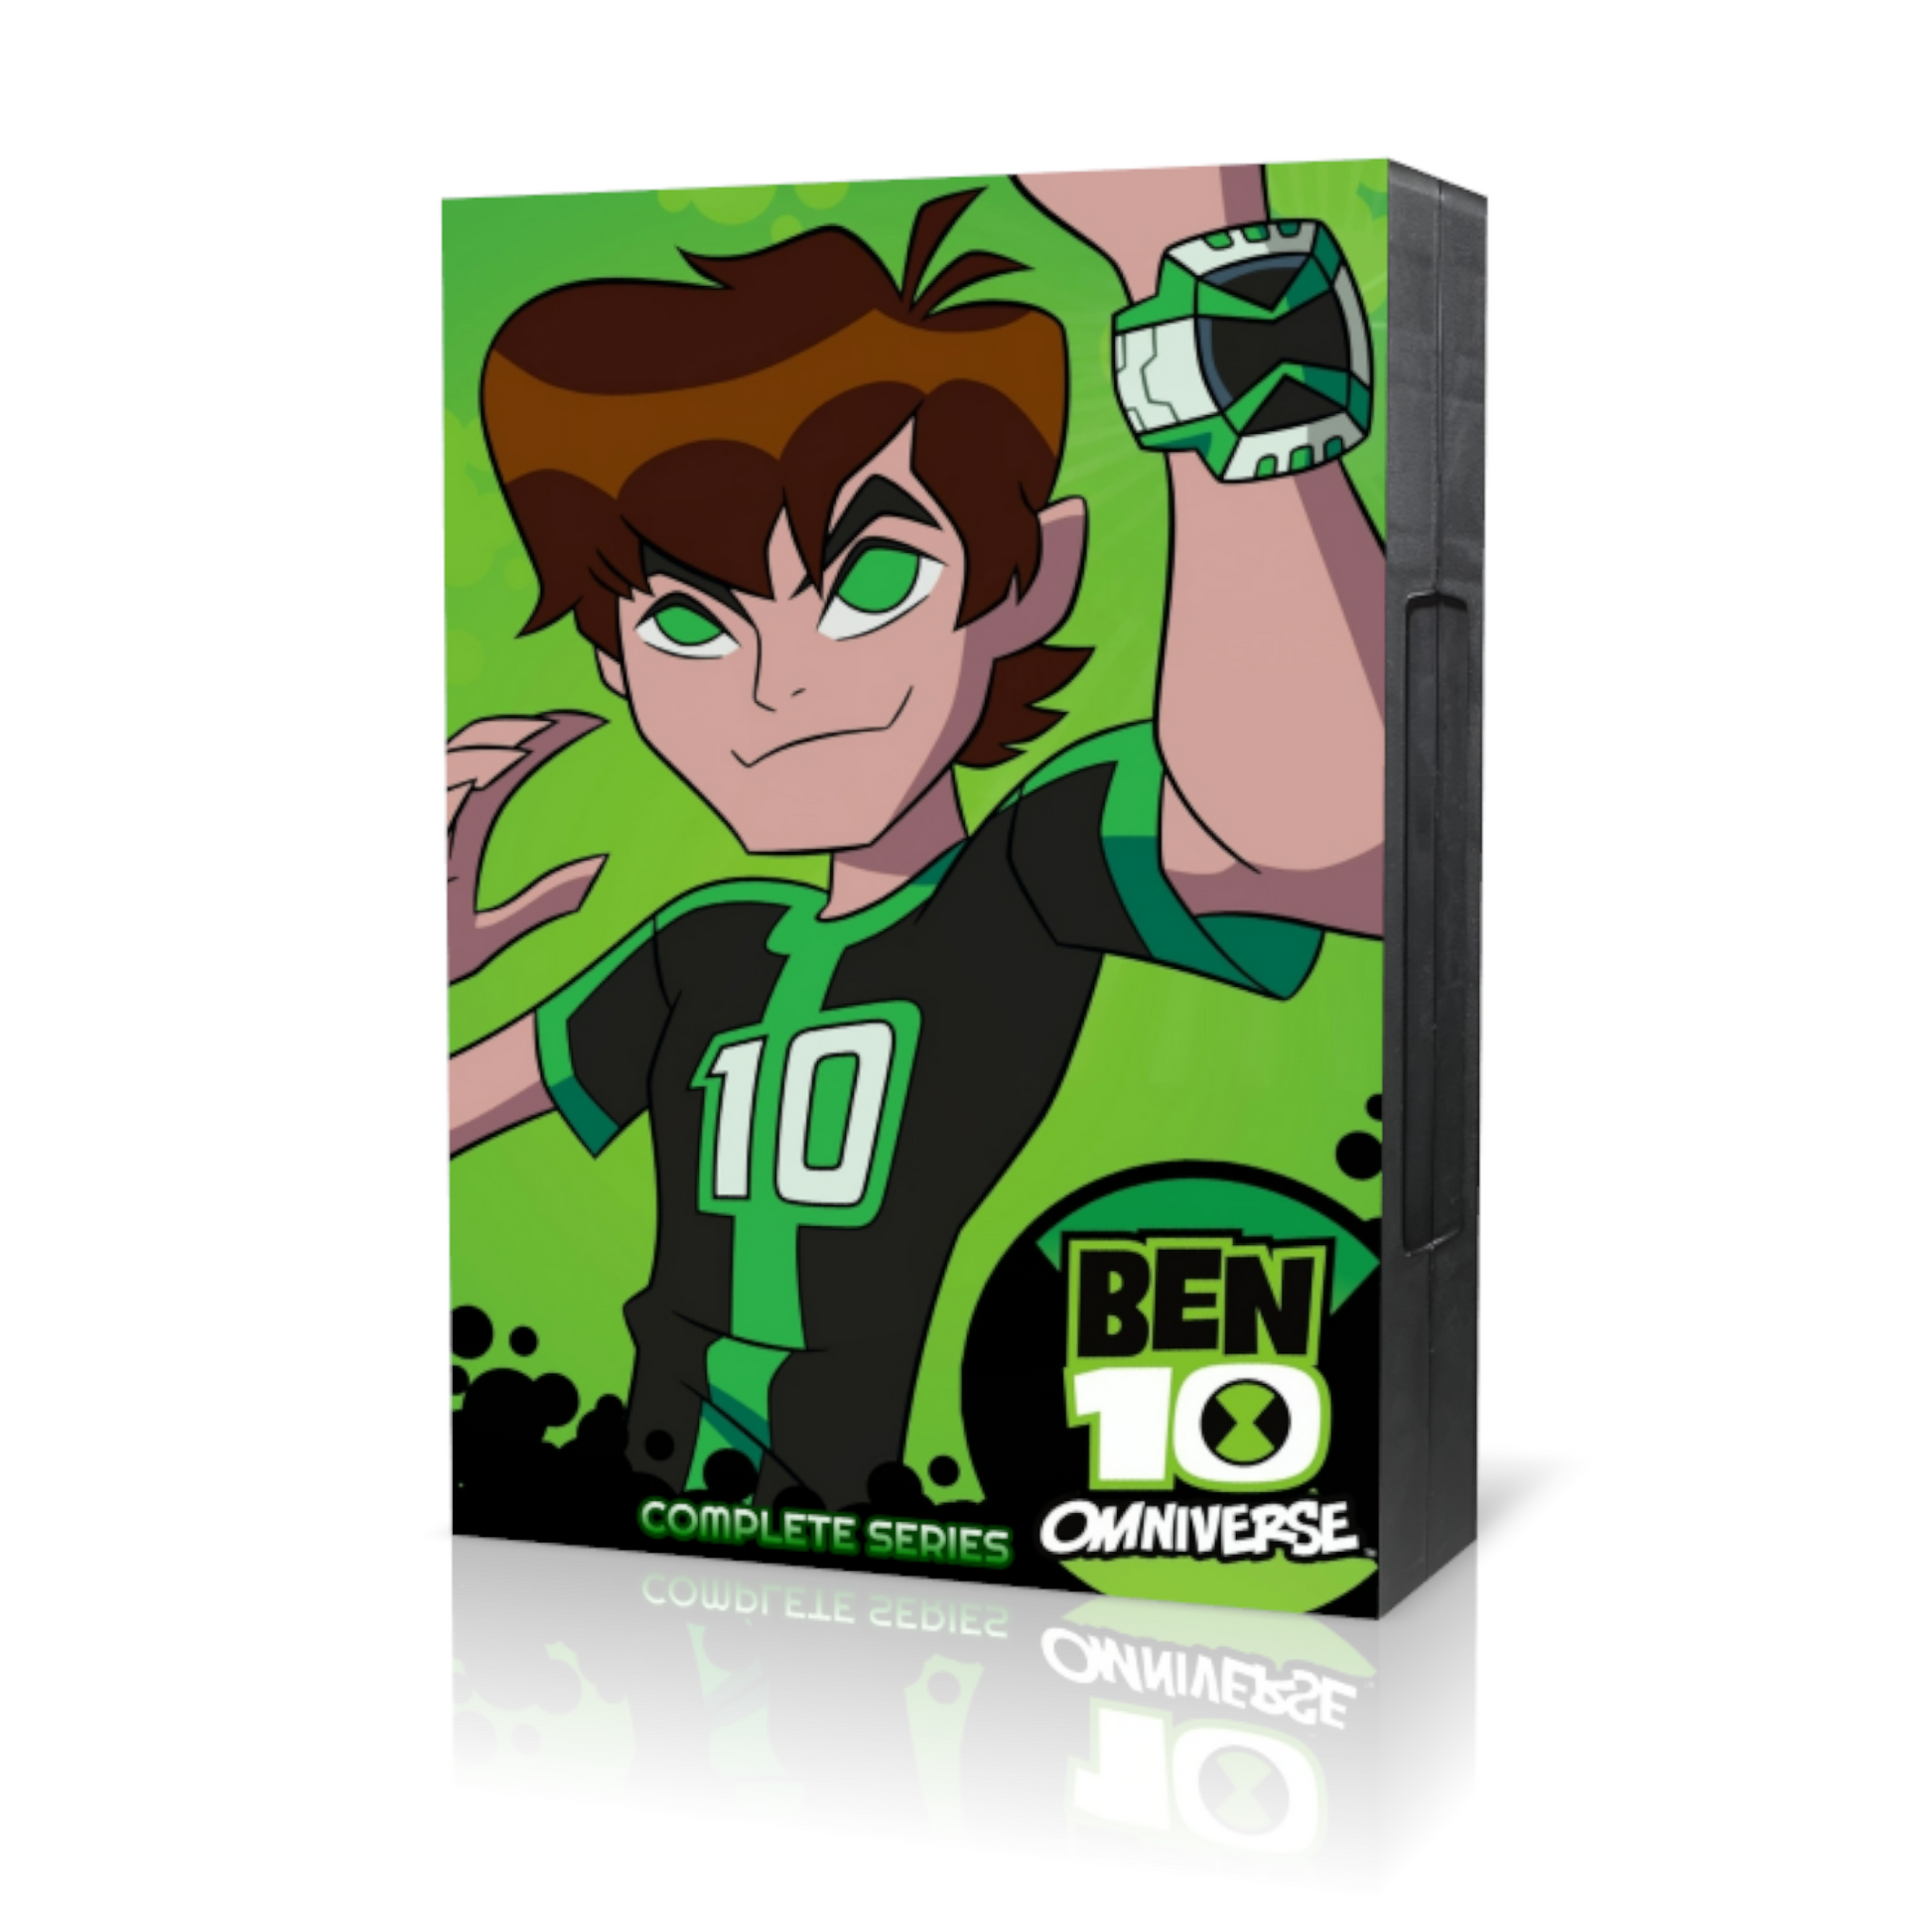 Ben 10: The Complete Season 2 (DVD) 